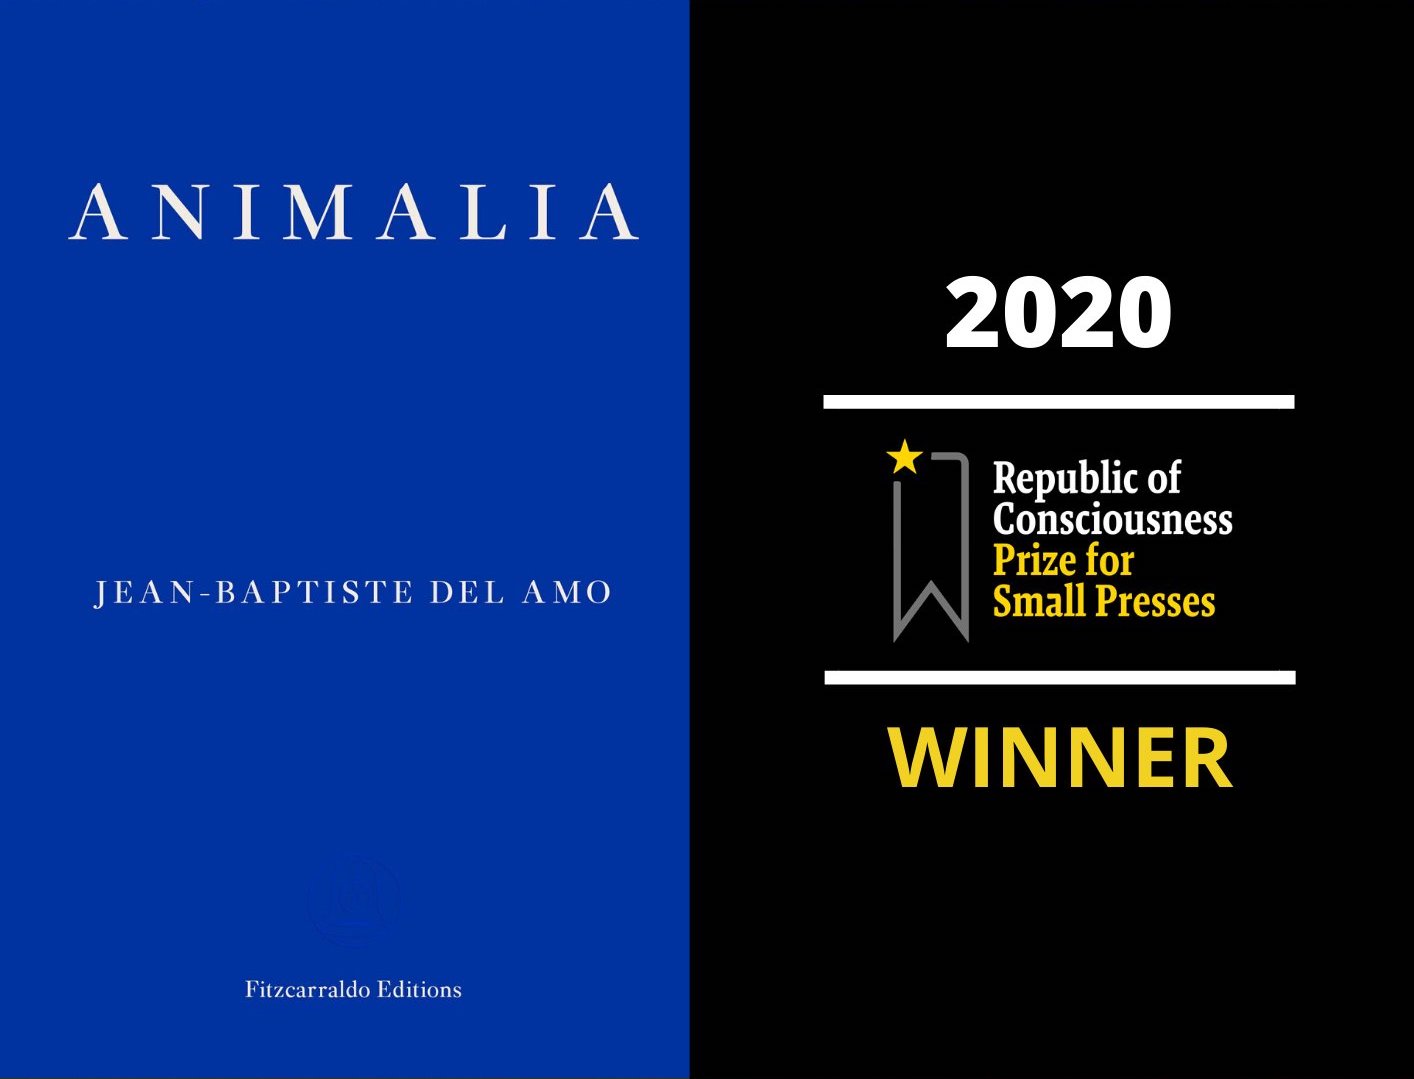 Fitzcarraldo Editions wins Republic of Consciousness prize for Animalia